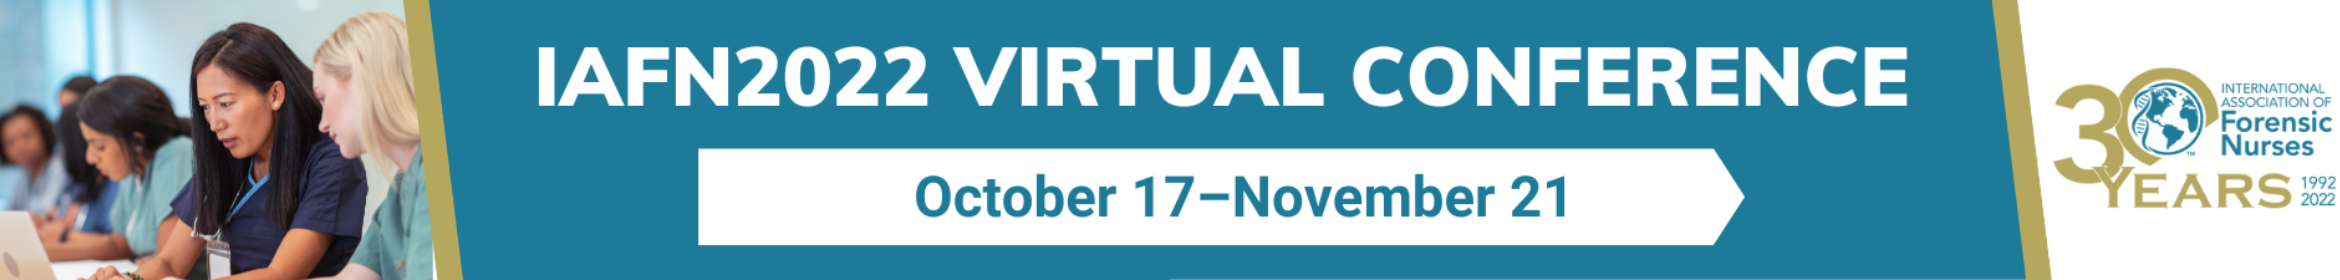 IAFN2022  Virtual Conference Main banner